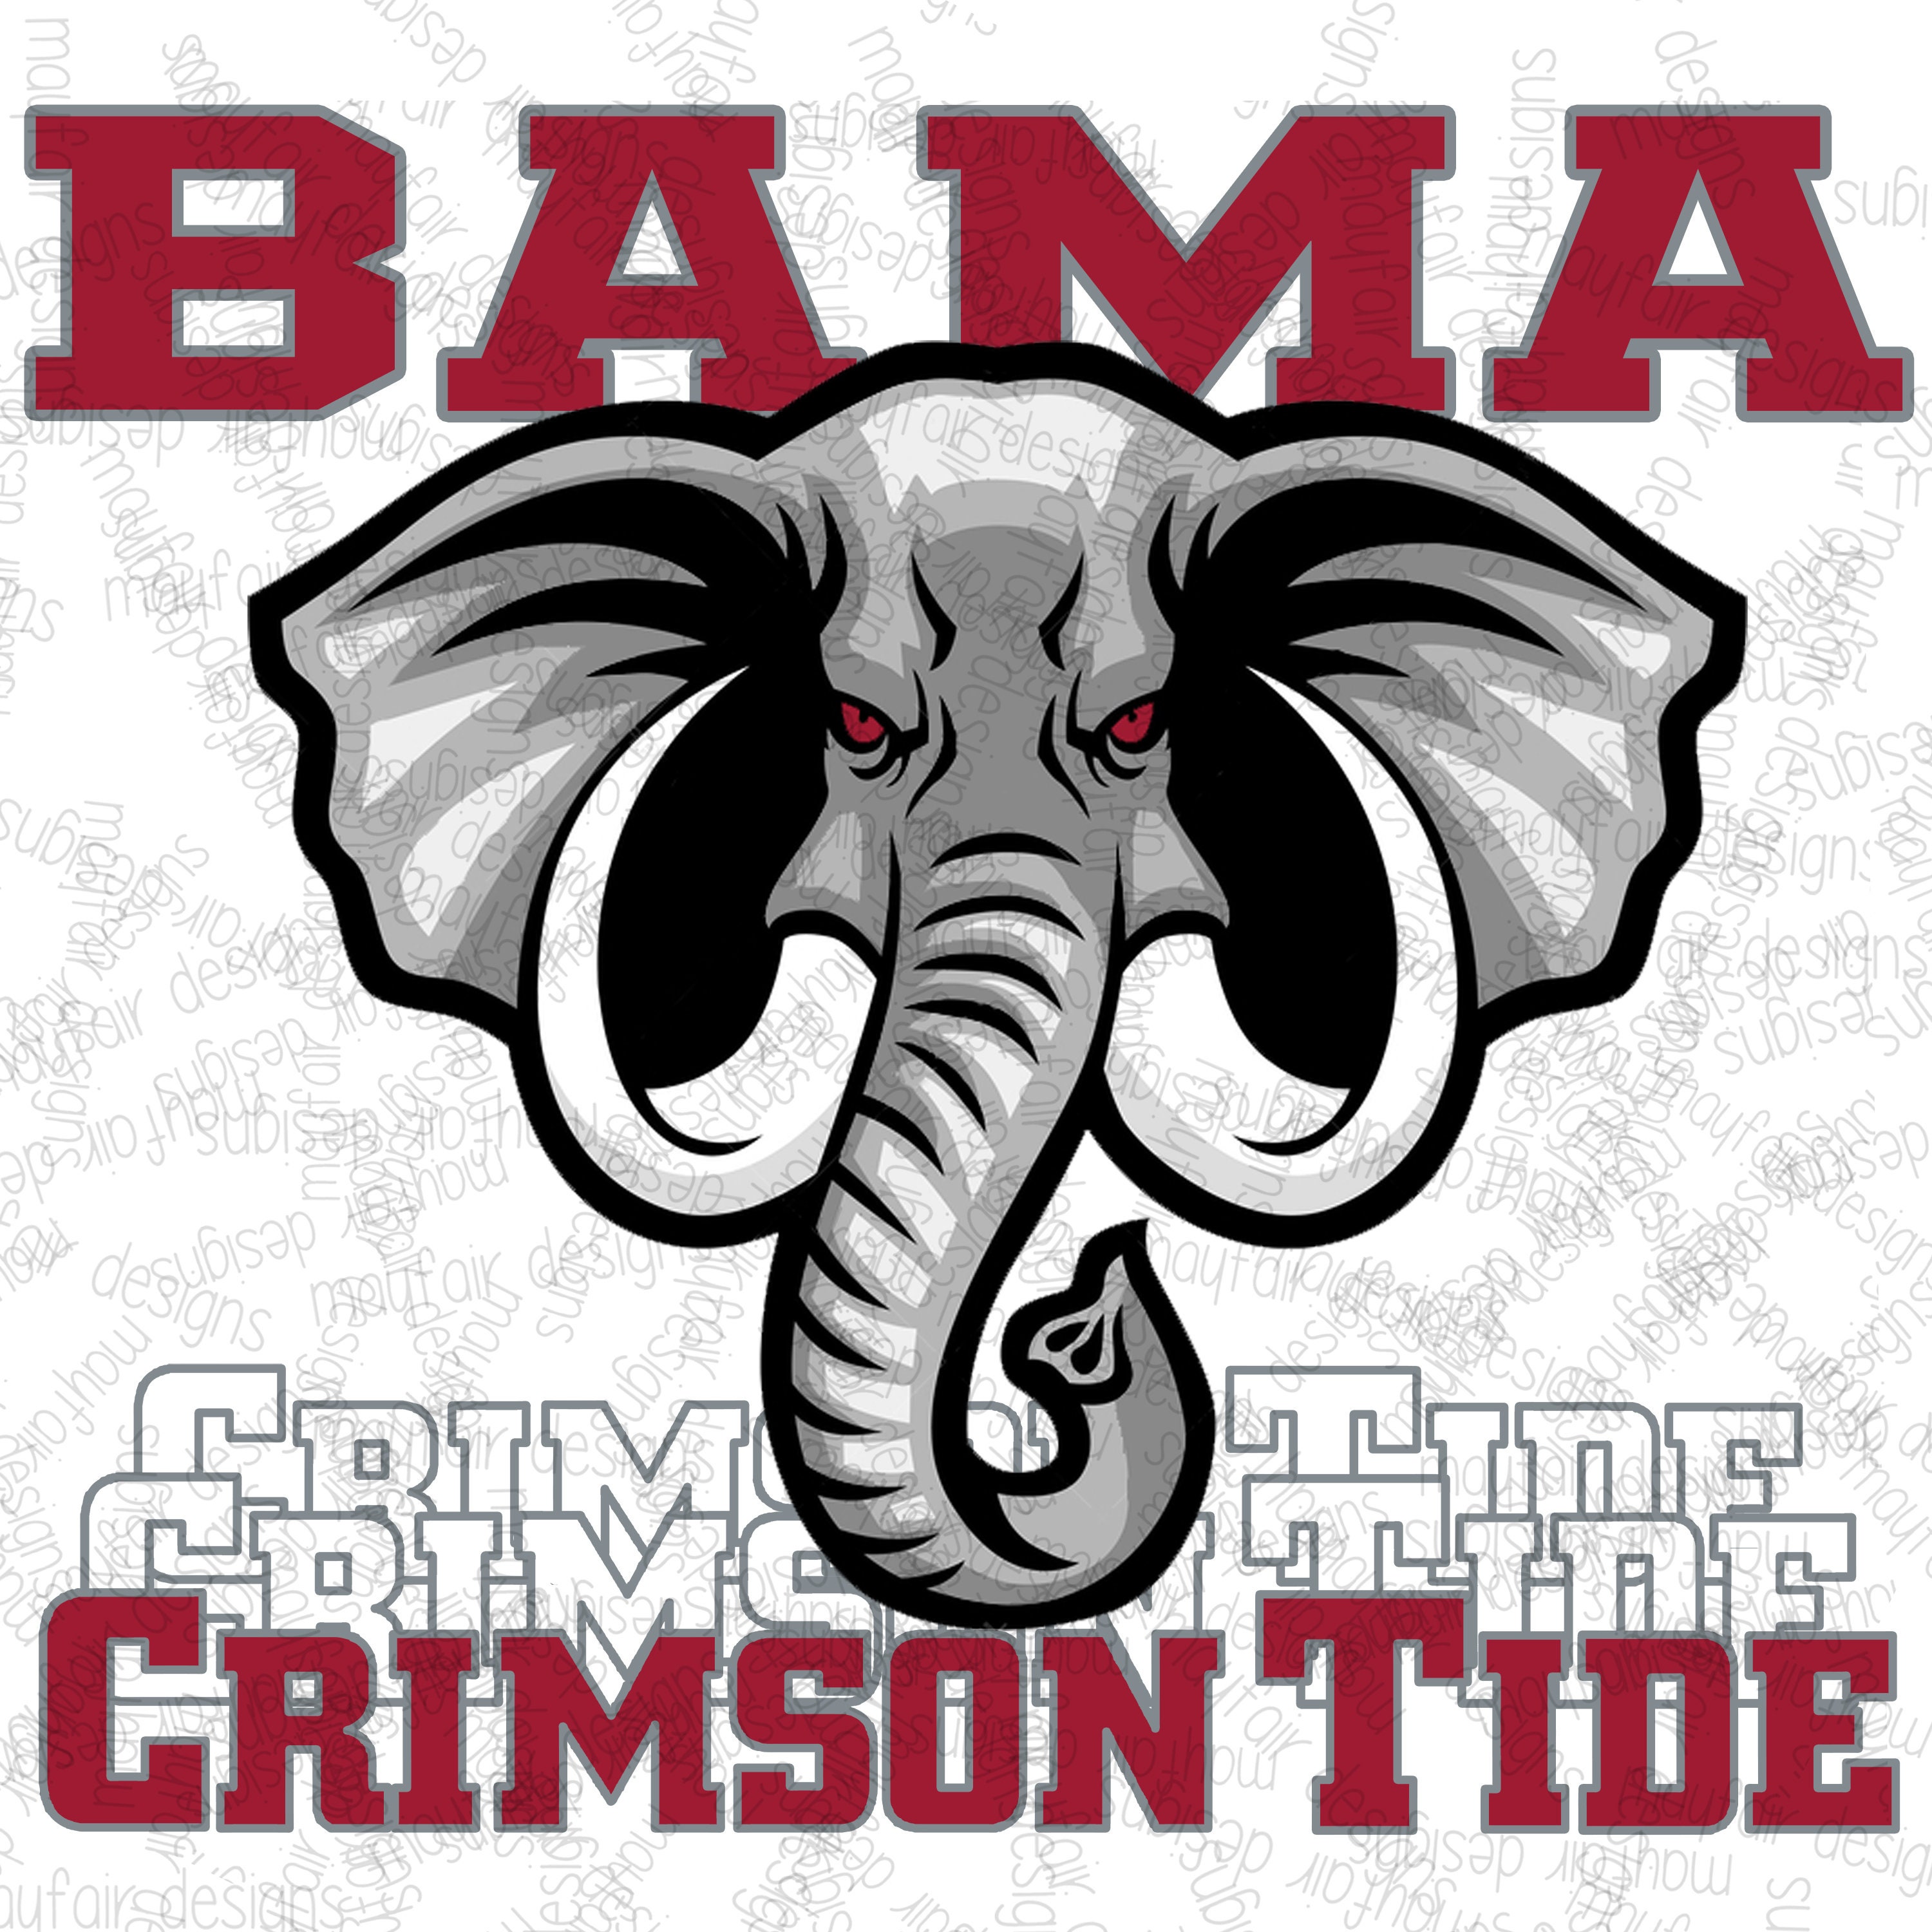 Limited Edition Alabama Crimson Tide Logo with Football Stripes Poster Art  - 13x19